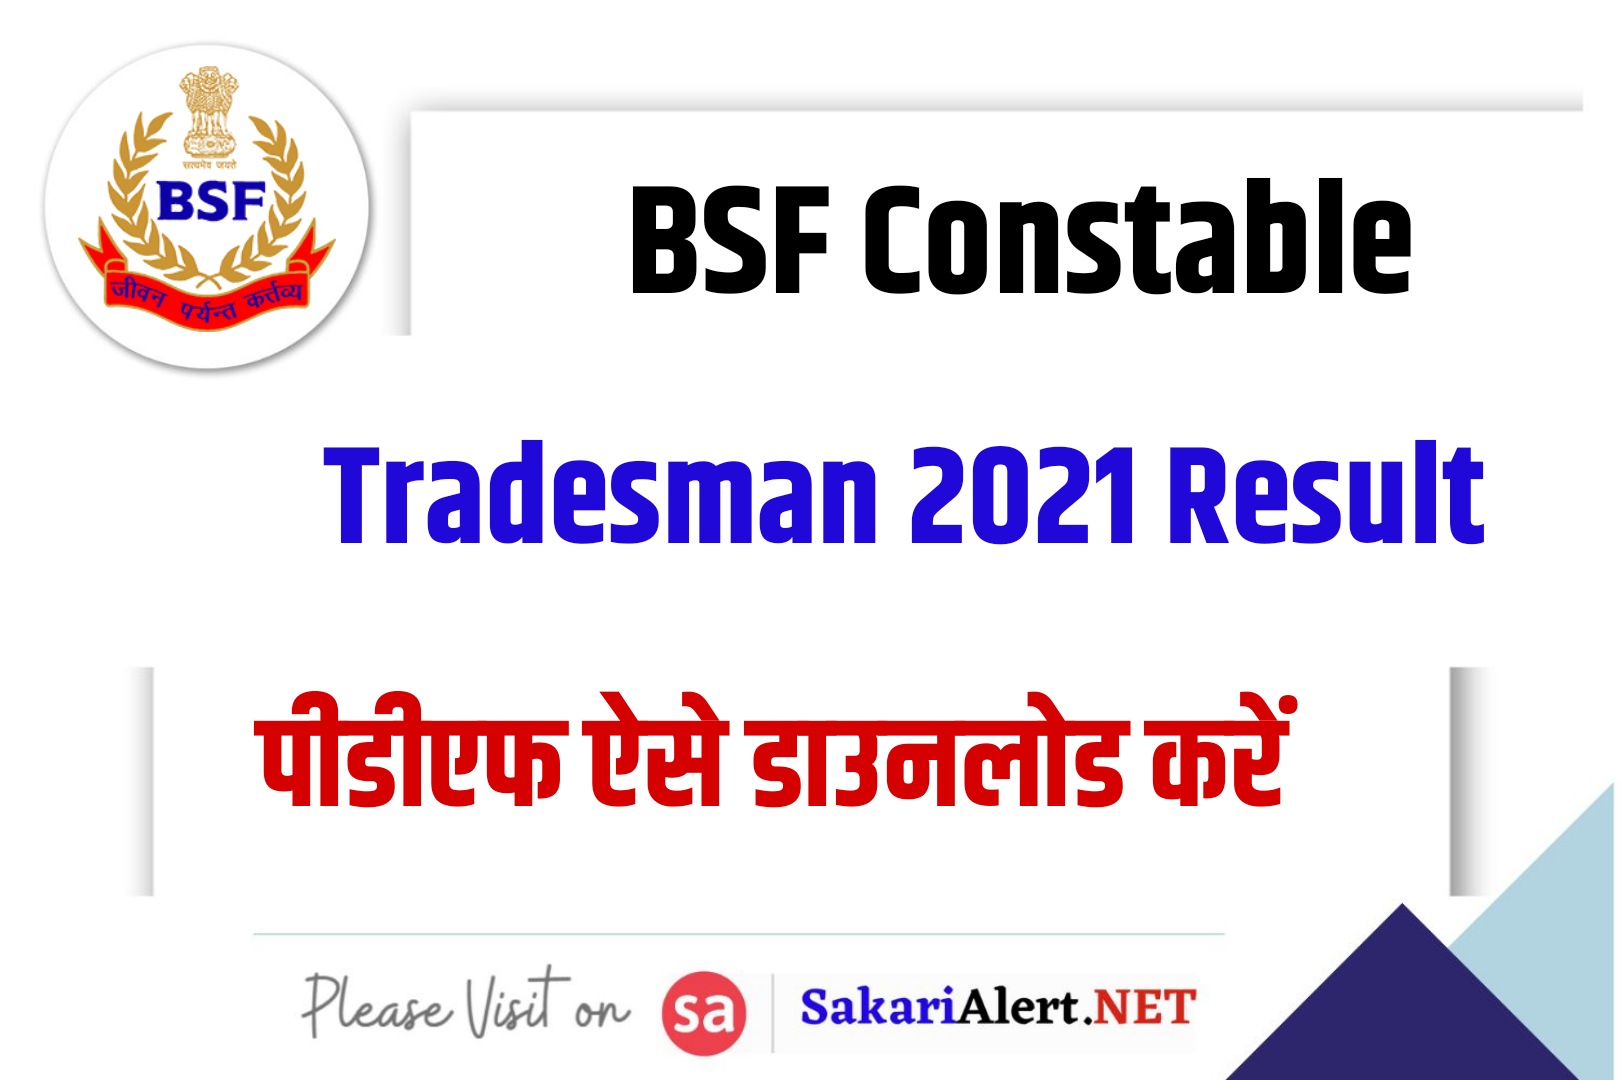 BSF Constable Tradesman 2021 Result | बीएसएफ कांस्टेबल ट्रेड्समैन रिजल्ट